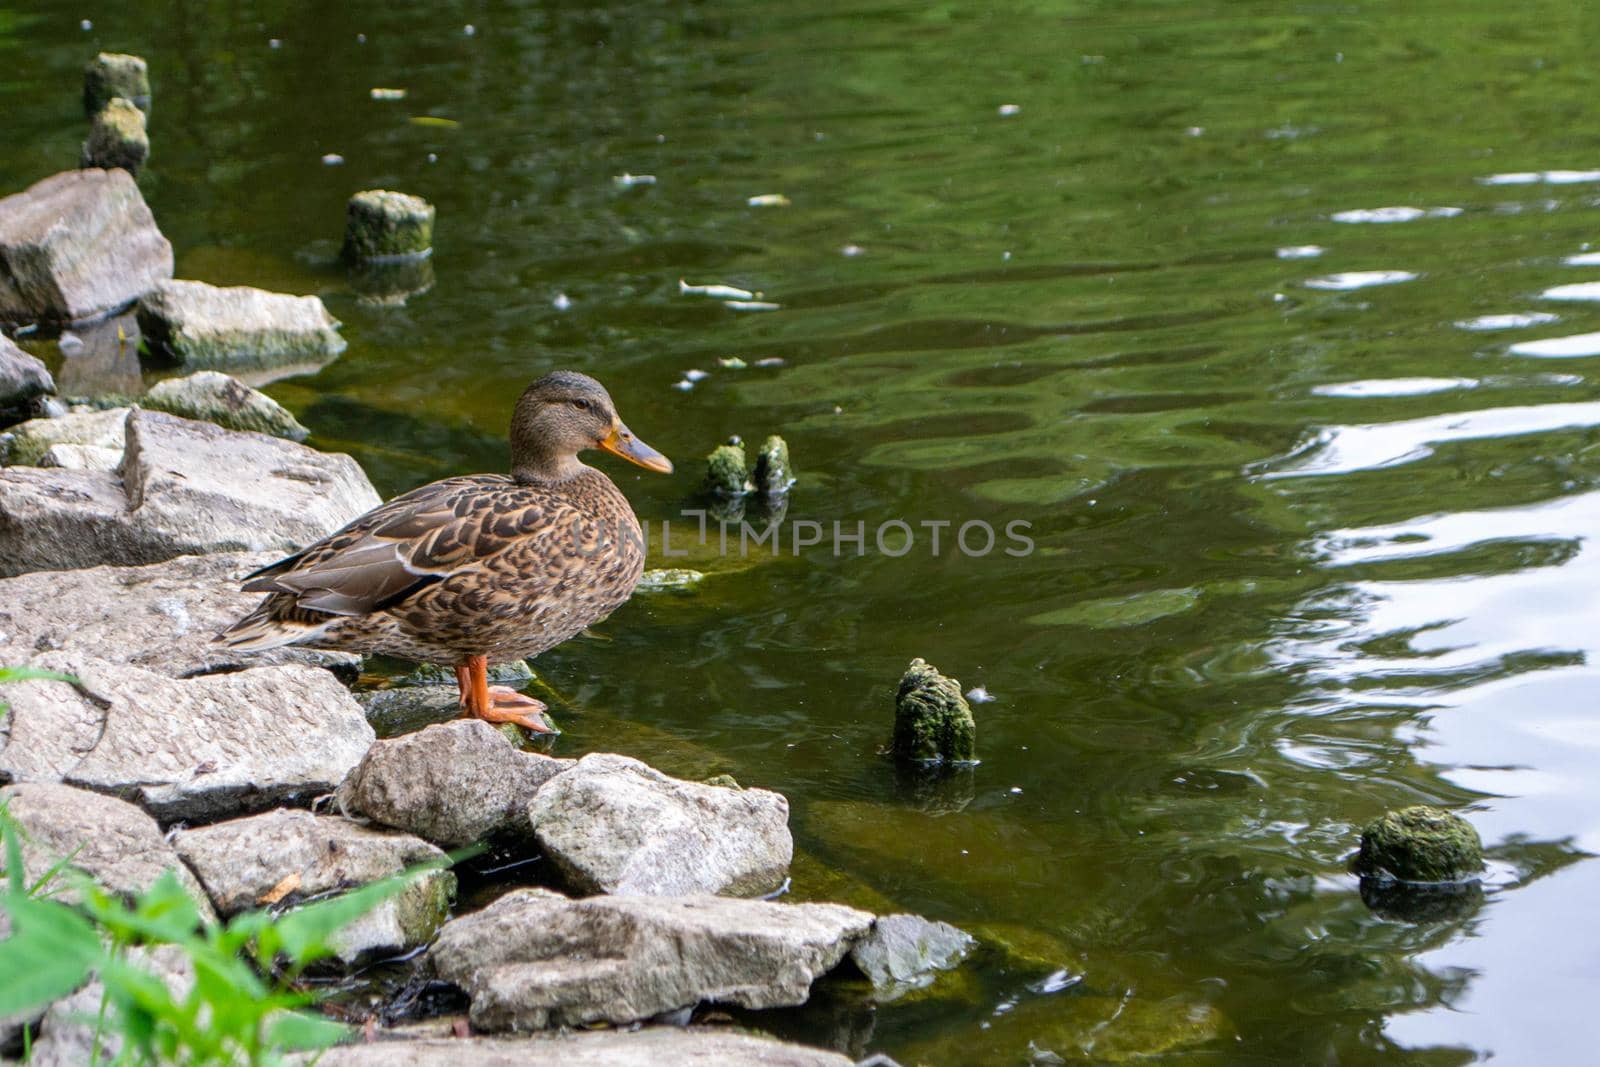 Ducks enjoying pond life during an overcast day. High quality photo